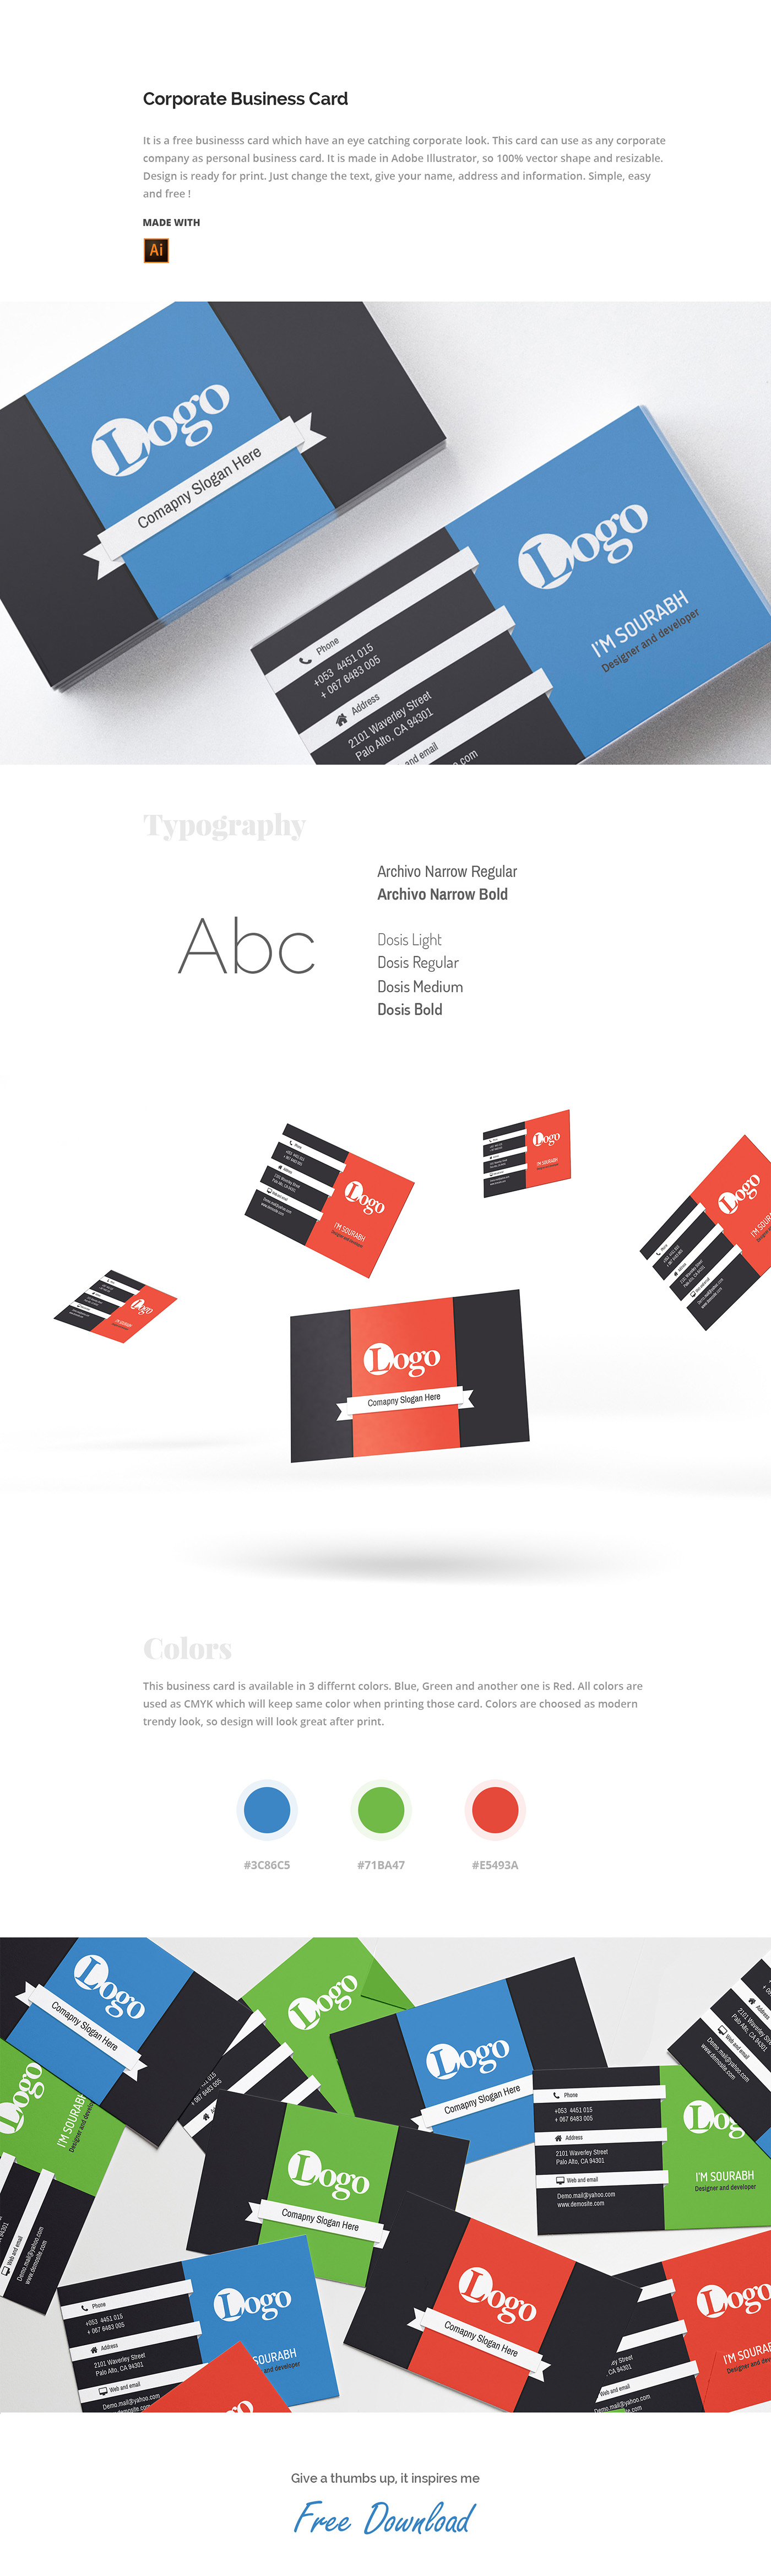 Business card design creative card freebie Corporate Design corporate card design